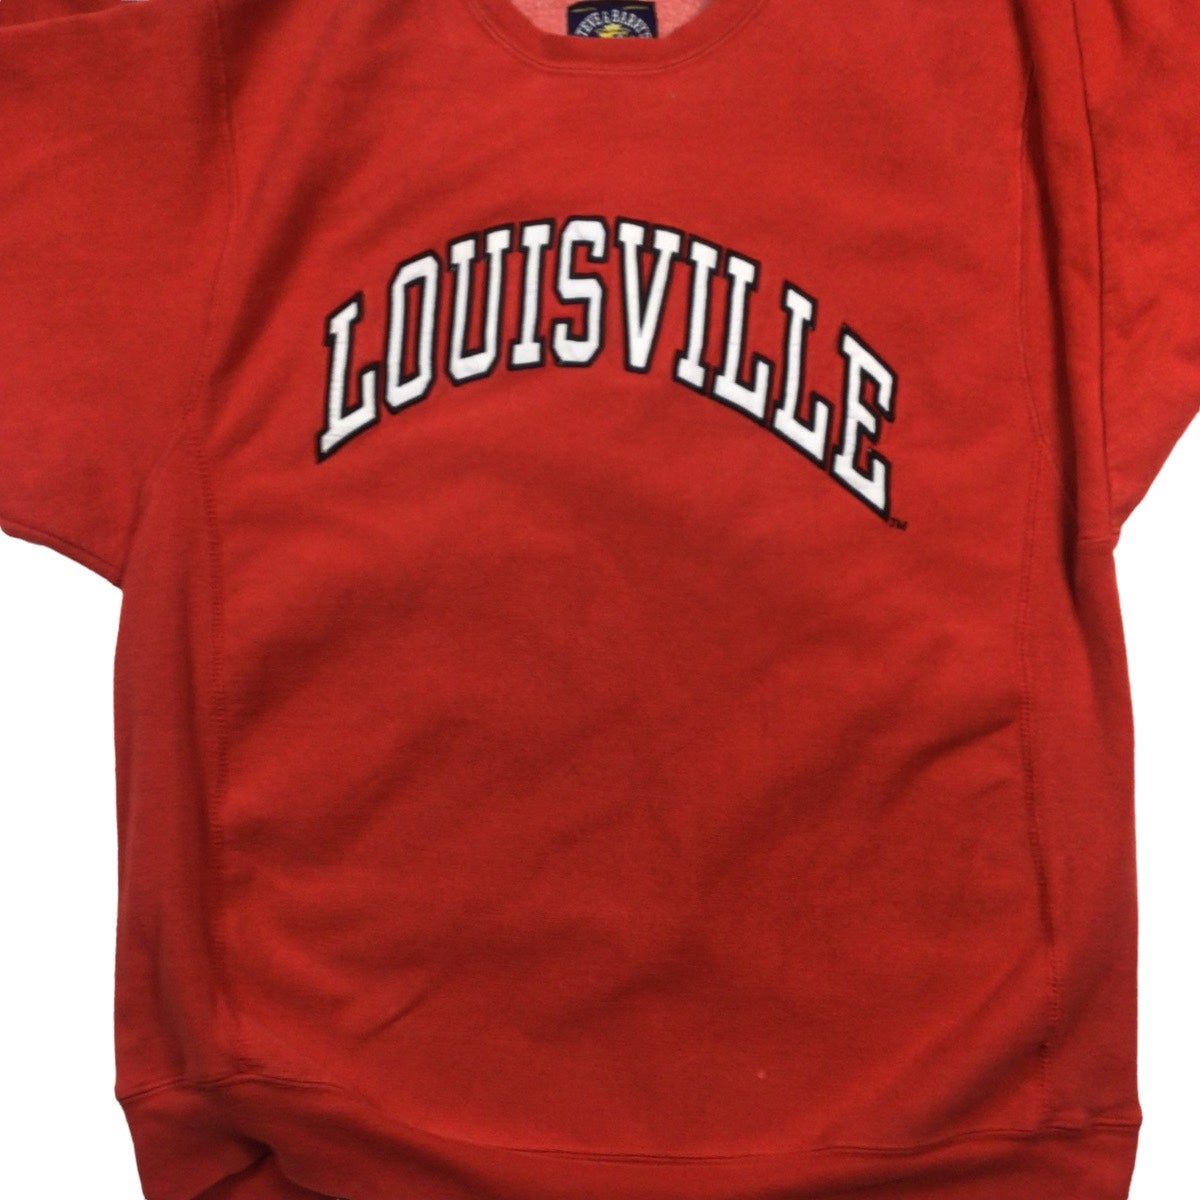 VTG Champion Reverse Weave Louisville Cardinals Crewneck Sweatshirt Sz  Large Red